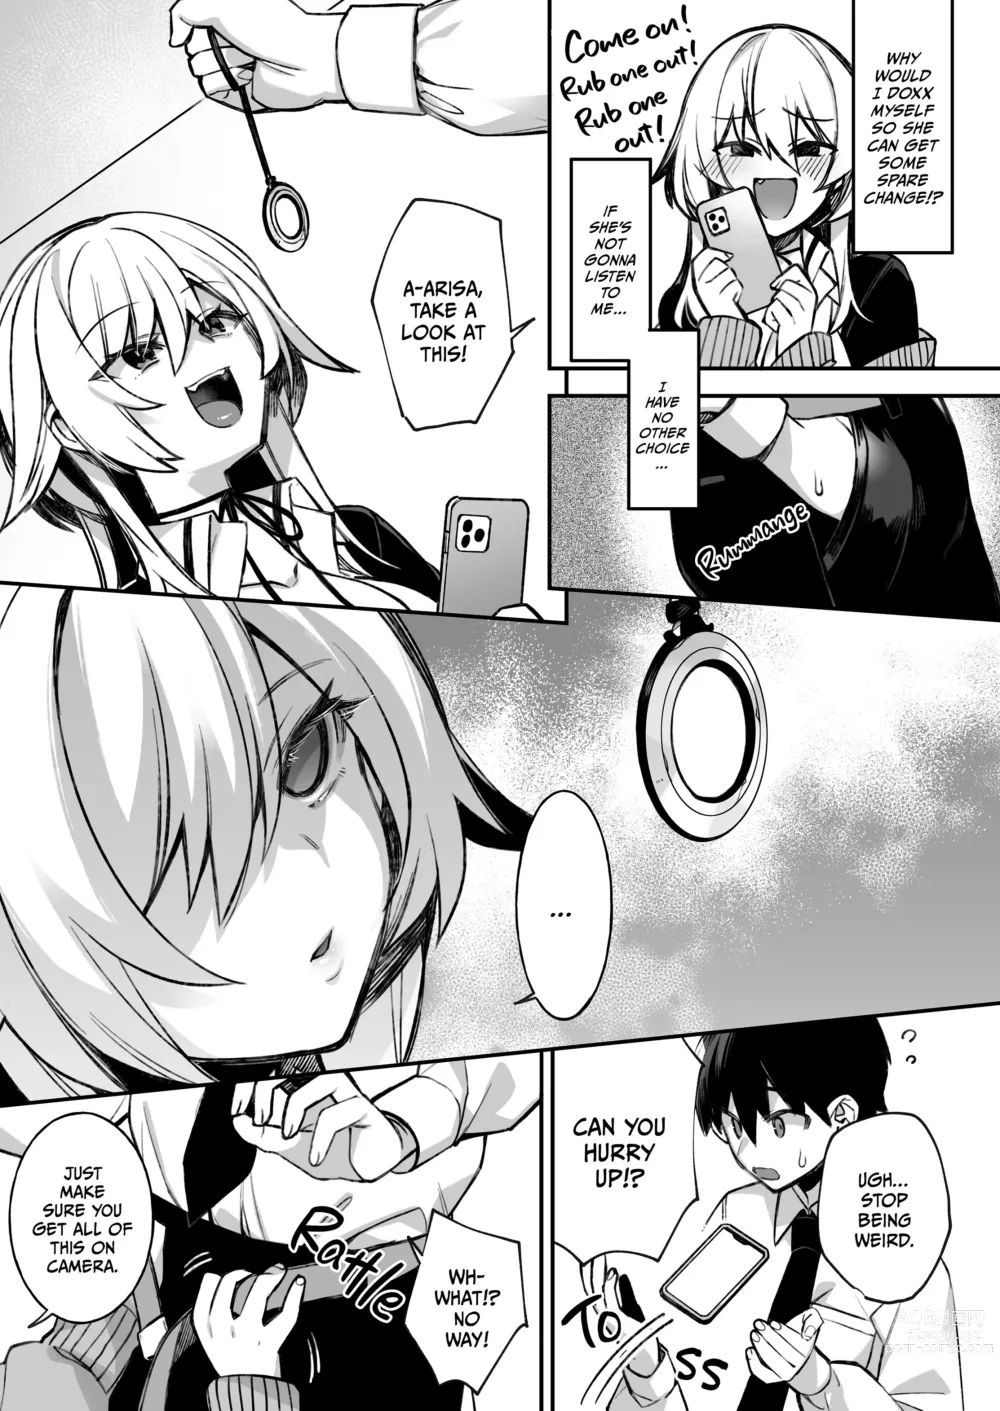 Page 32 of manga Hypnosis 1 (uncensored)